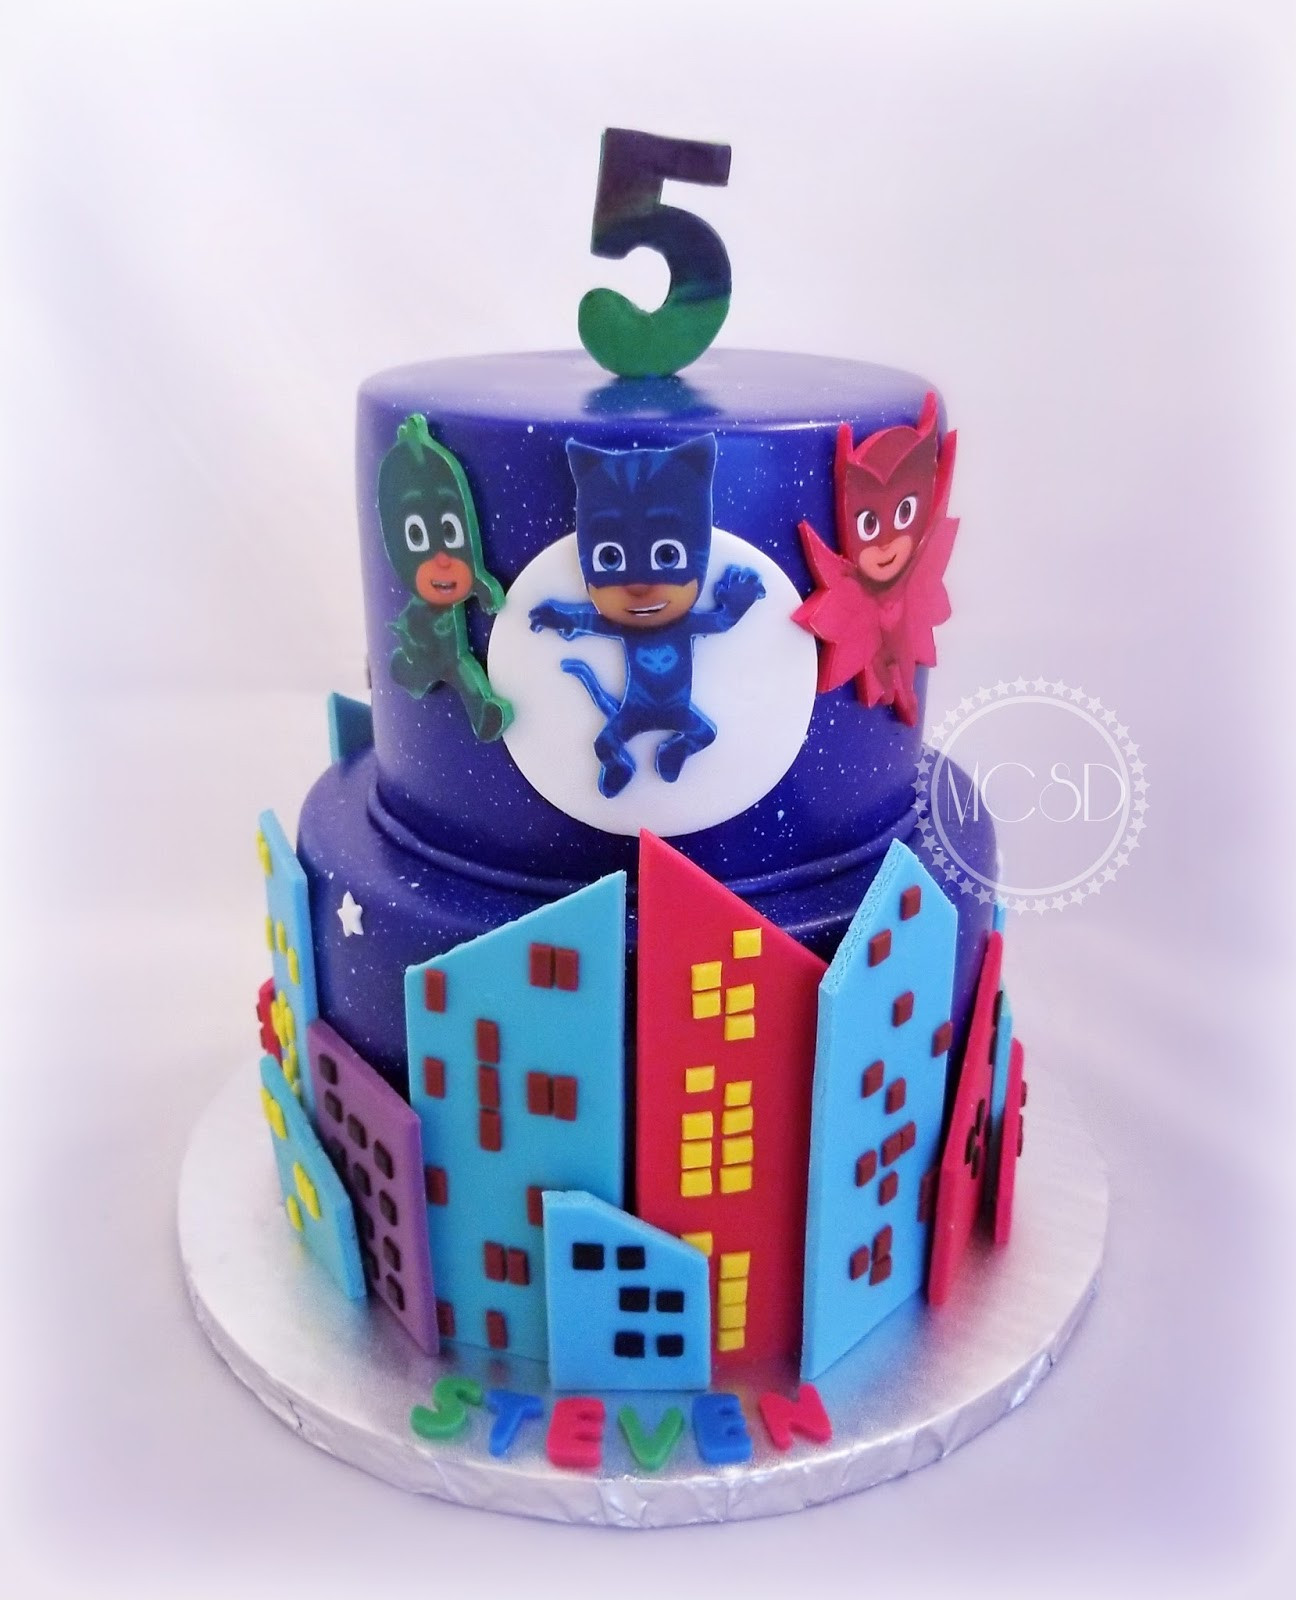 Best ideas about Pj Mask Birthday Cake
. Save or Pin MyCakeSweetDreams PJ Masks Birthday Cake Now.